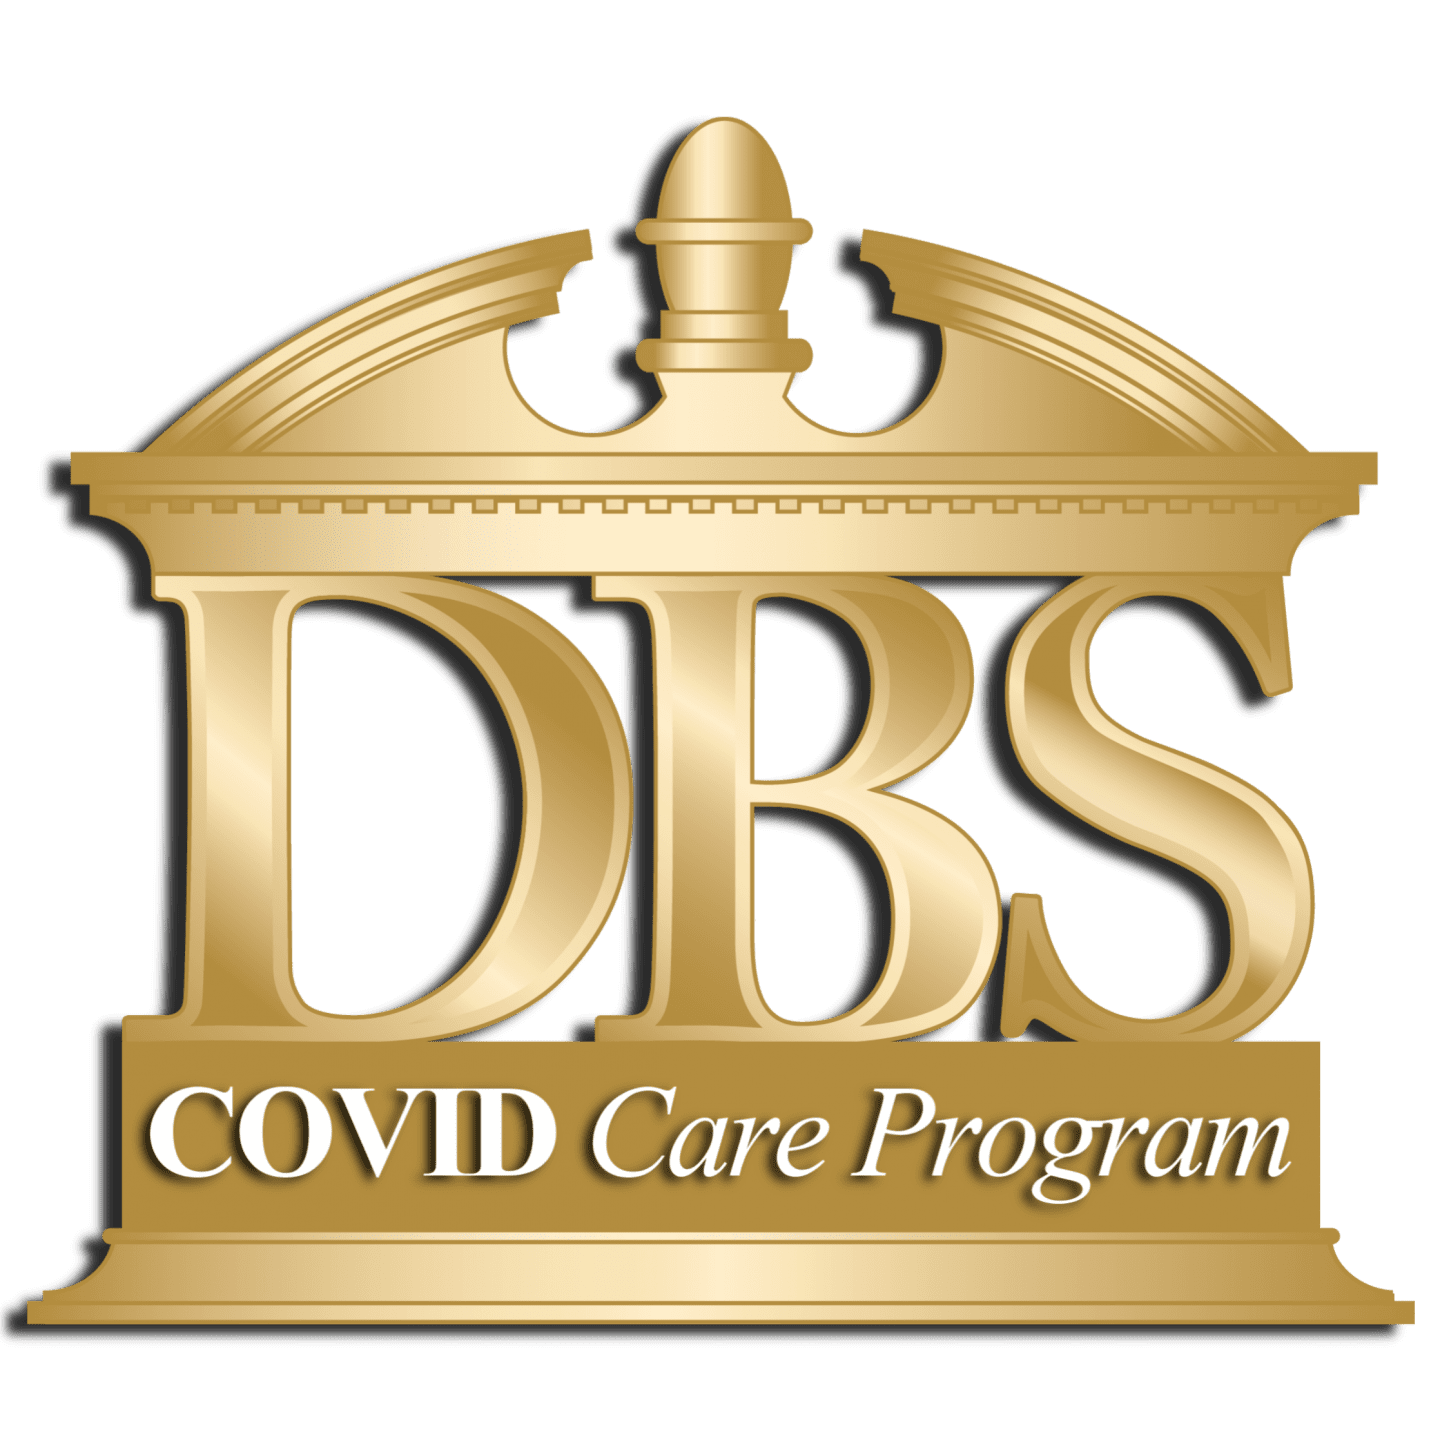  DBS GOLD LOGO - COVID CARE PROGRAM 